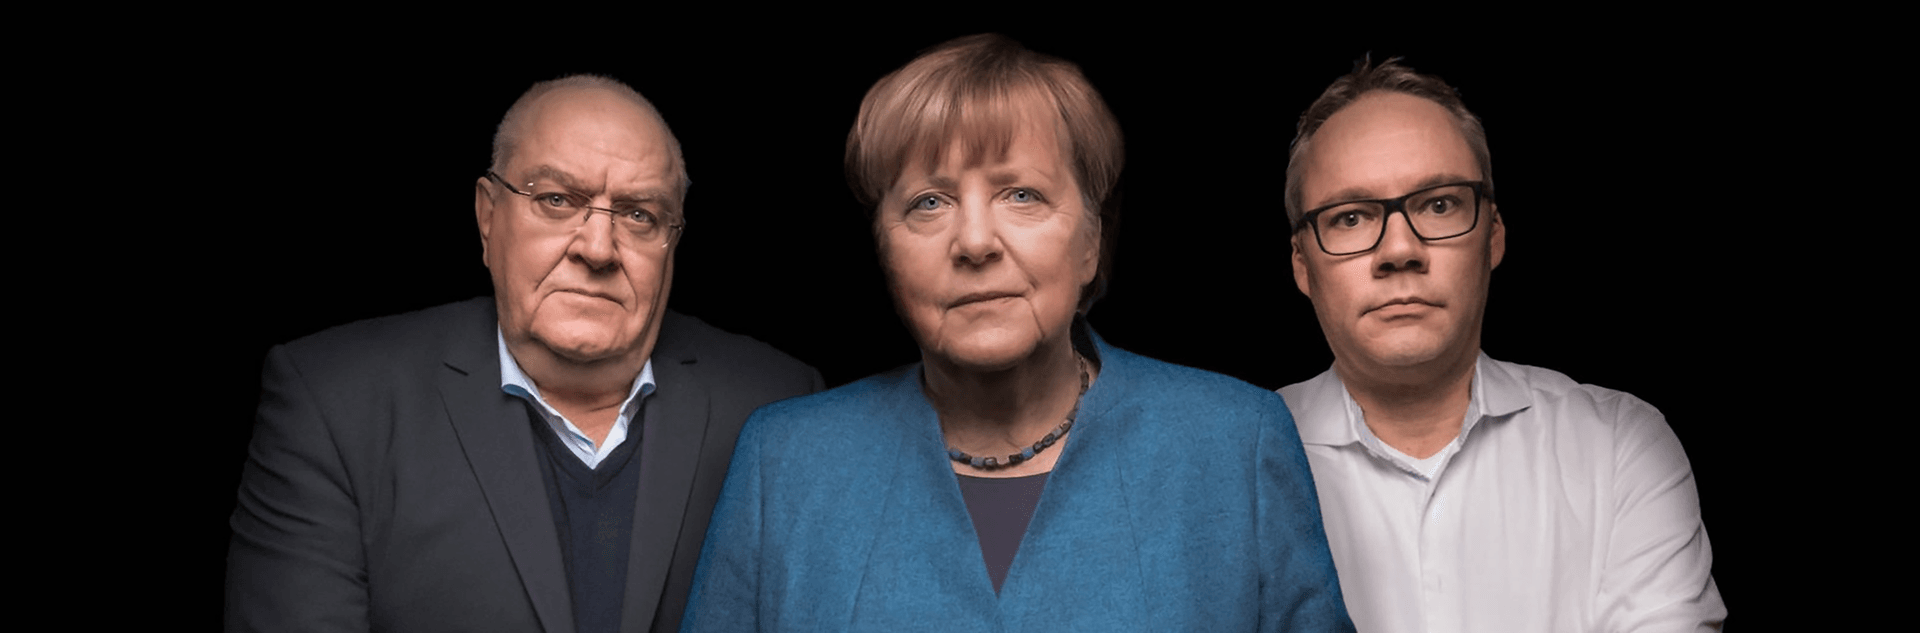 Angela Merkel im True-Crime-Podcast zu  Wagners "Nibelungen"